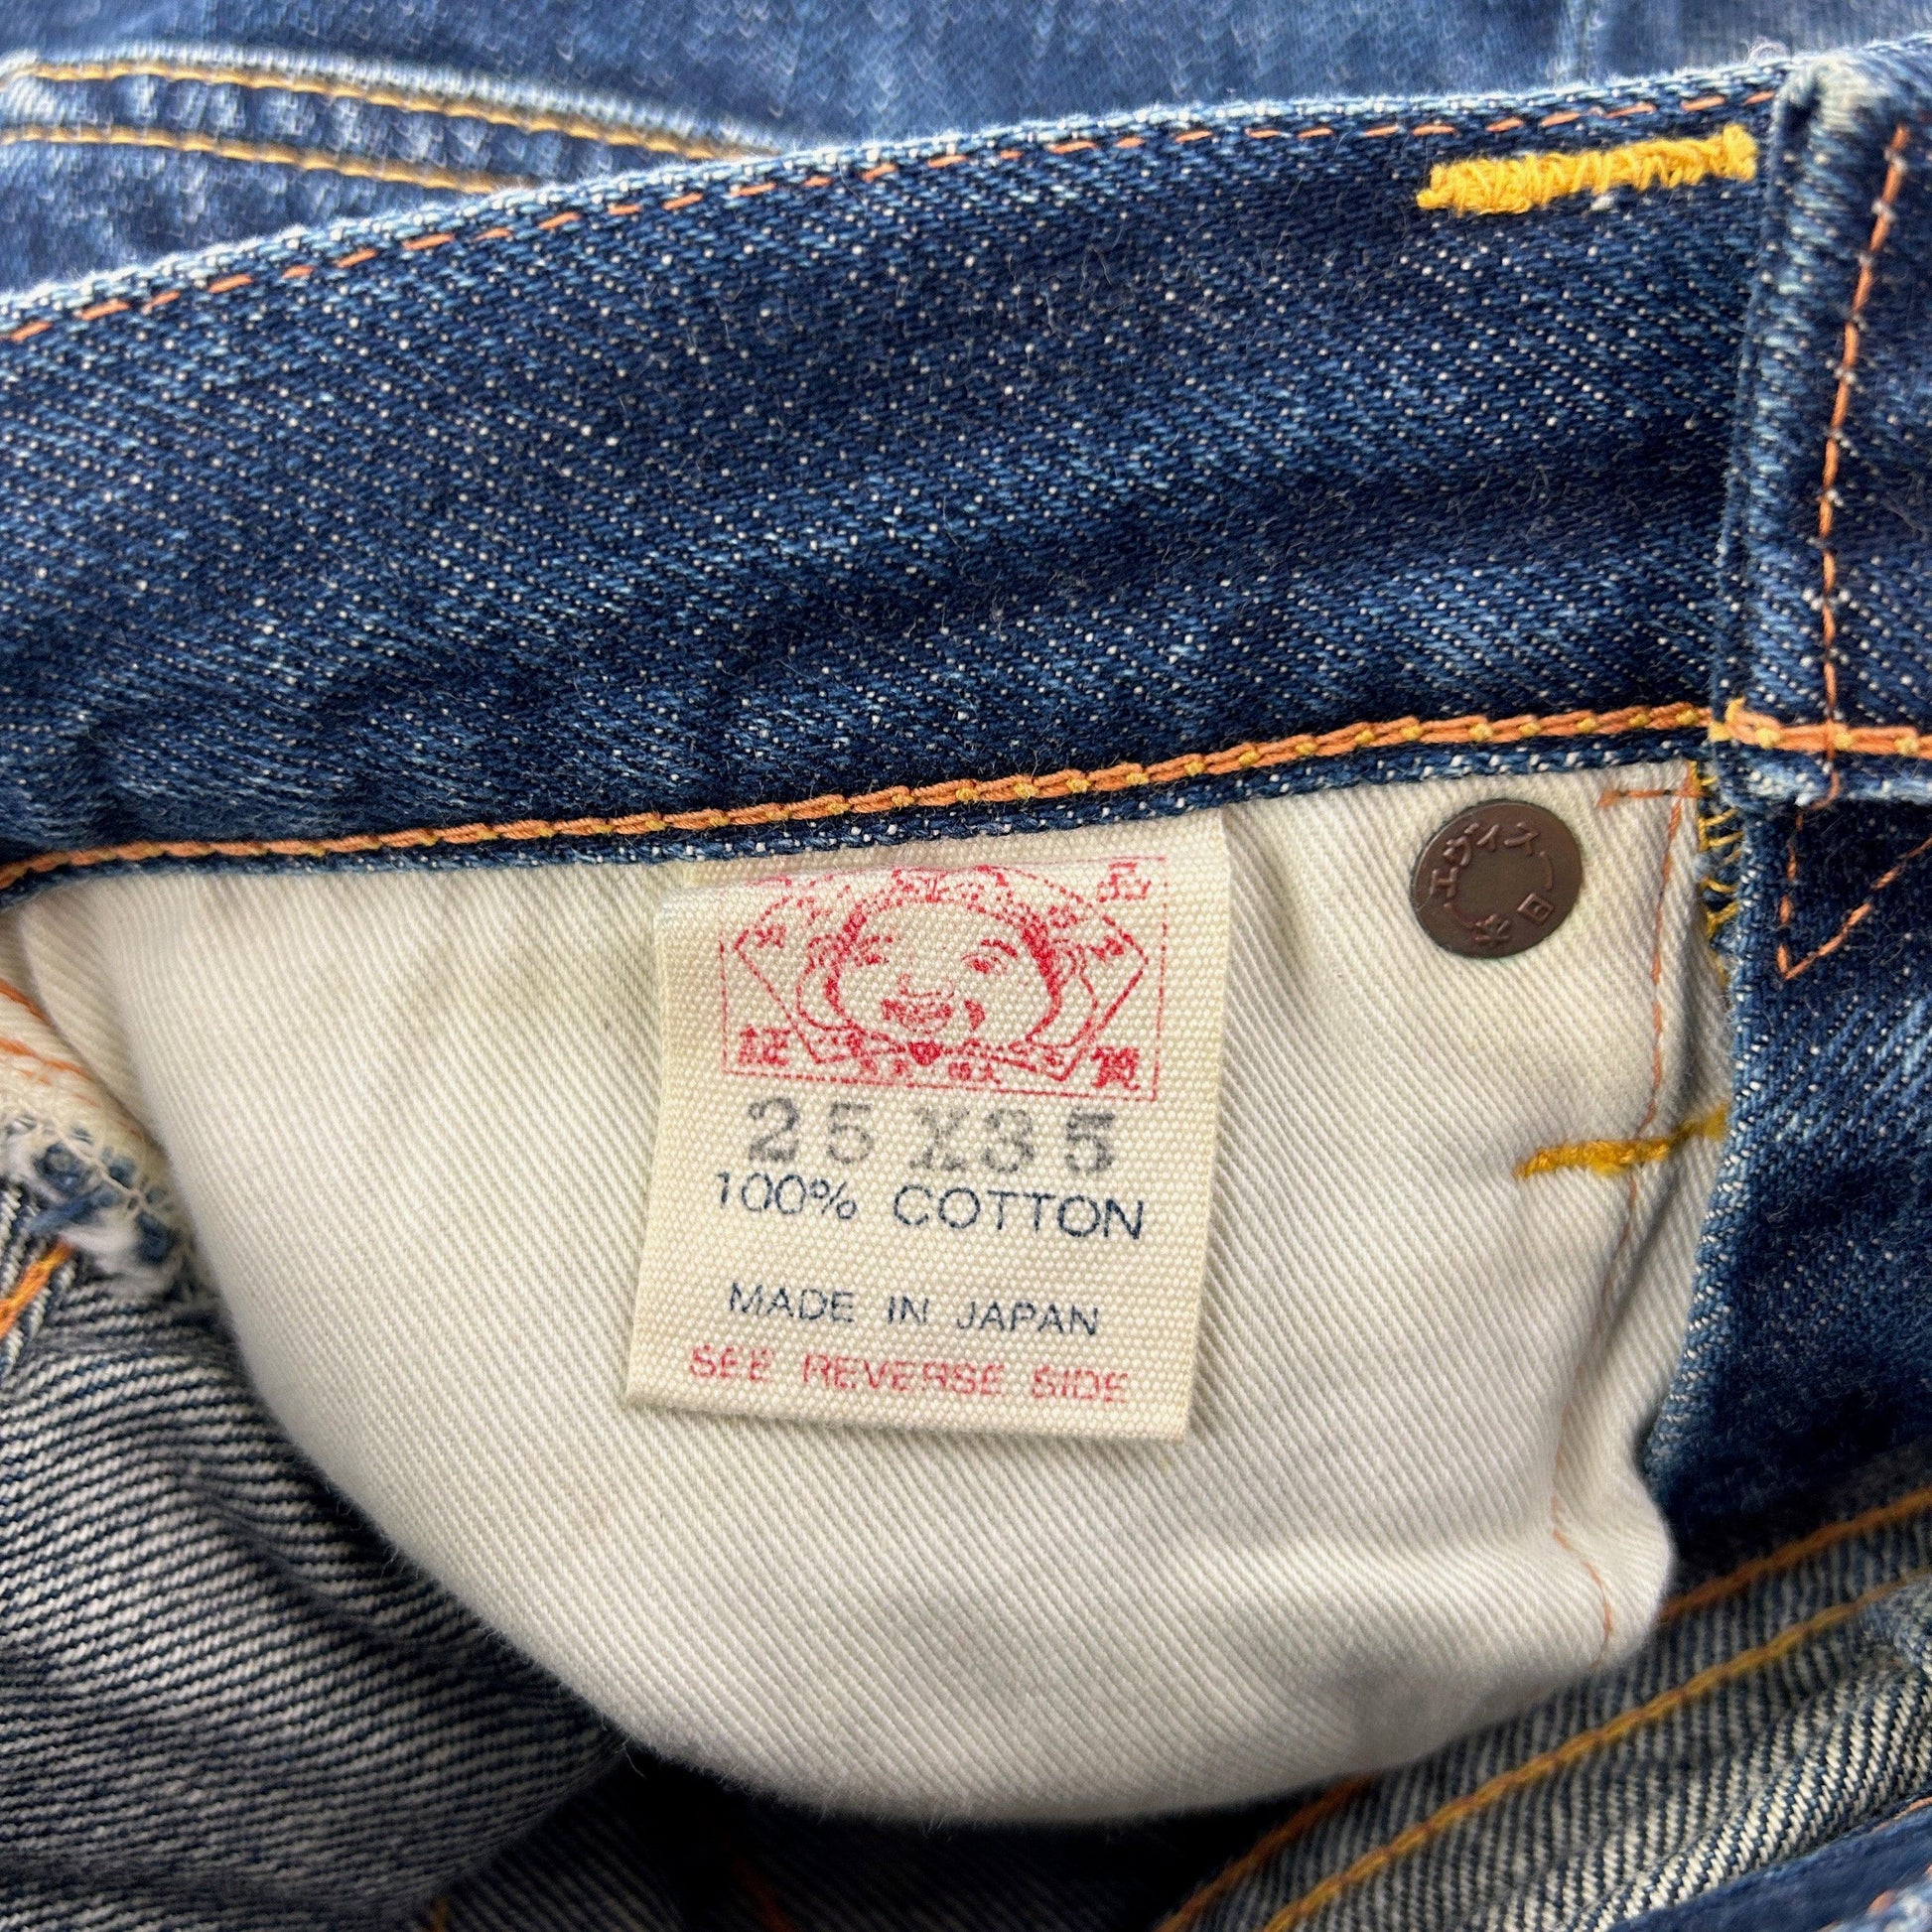 Vintage Evisu Japanese Denim Jeans Size W24 - Known Source